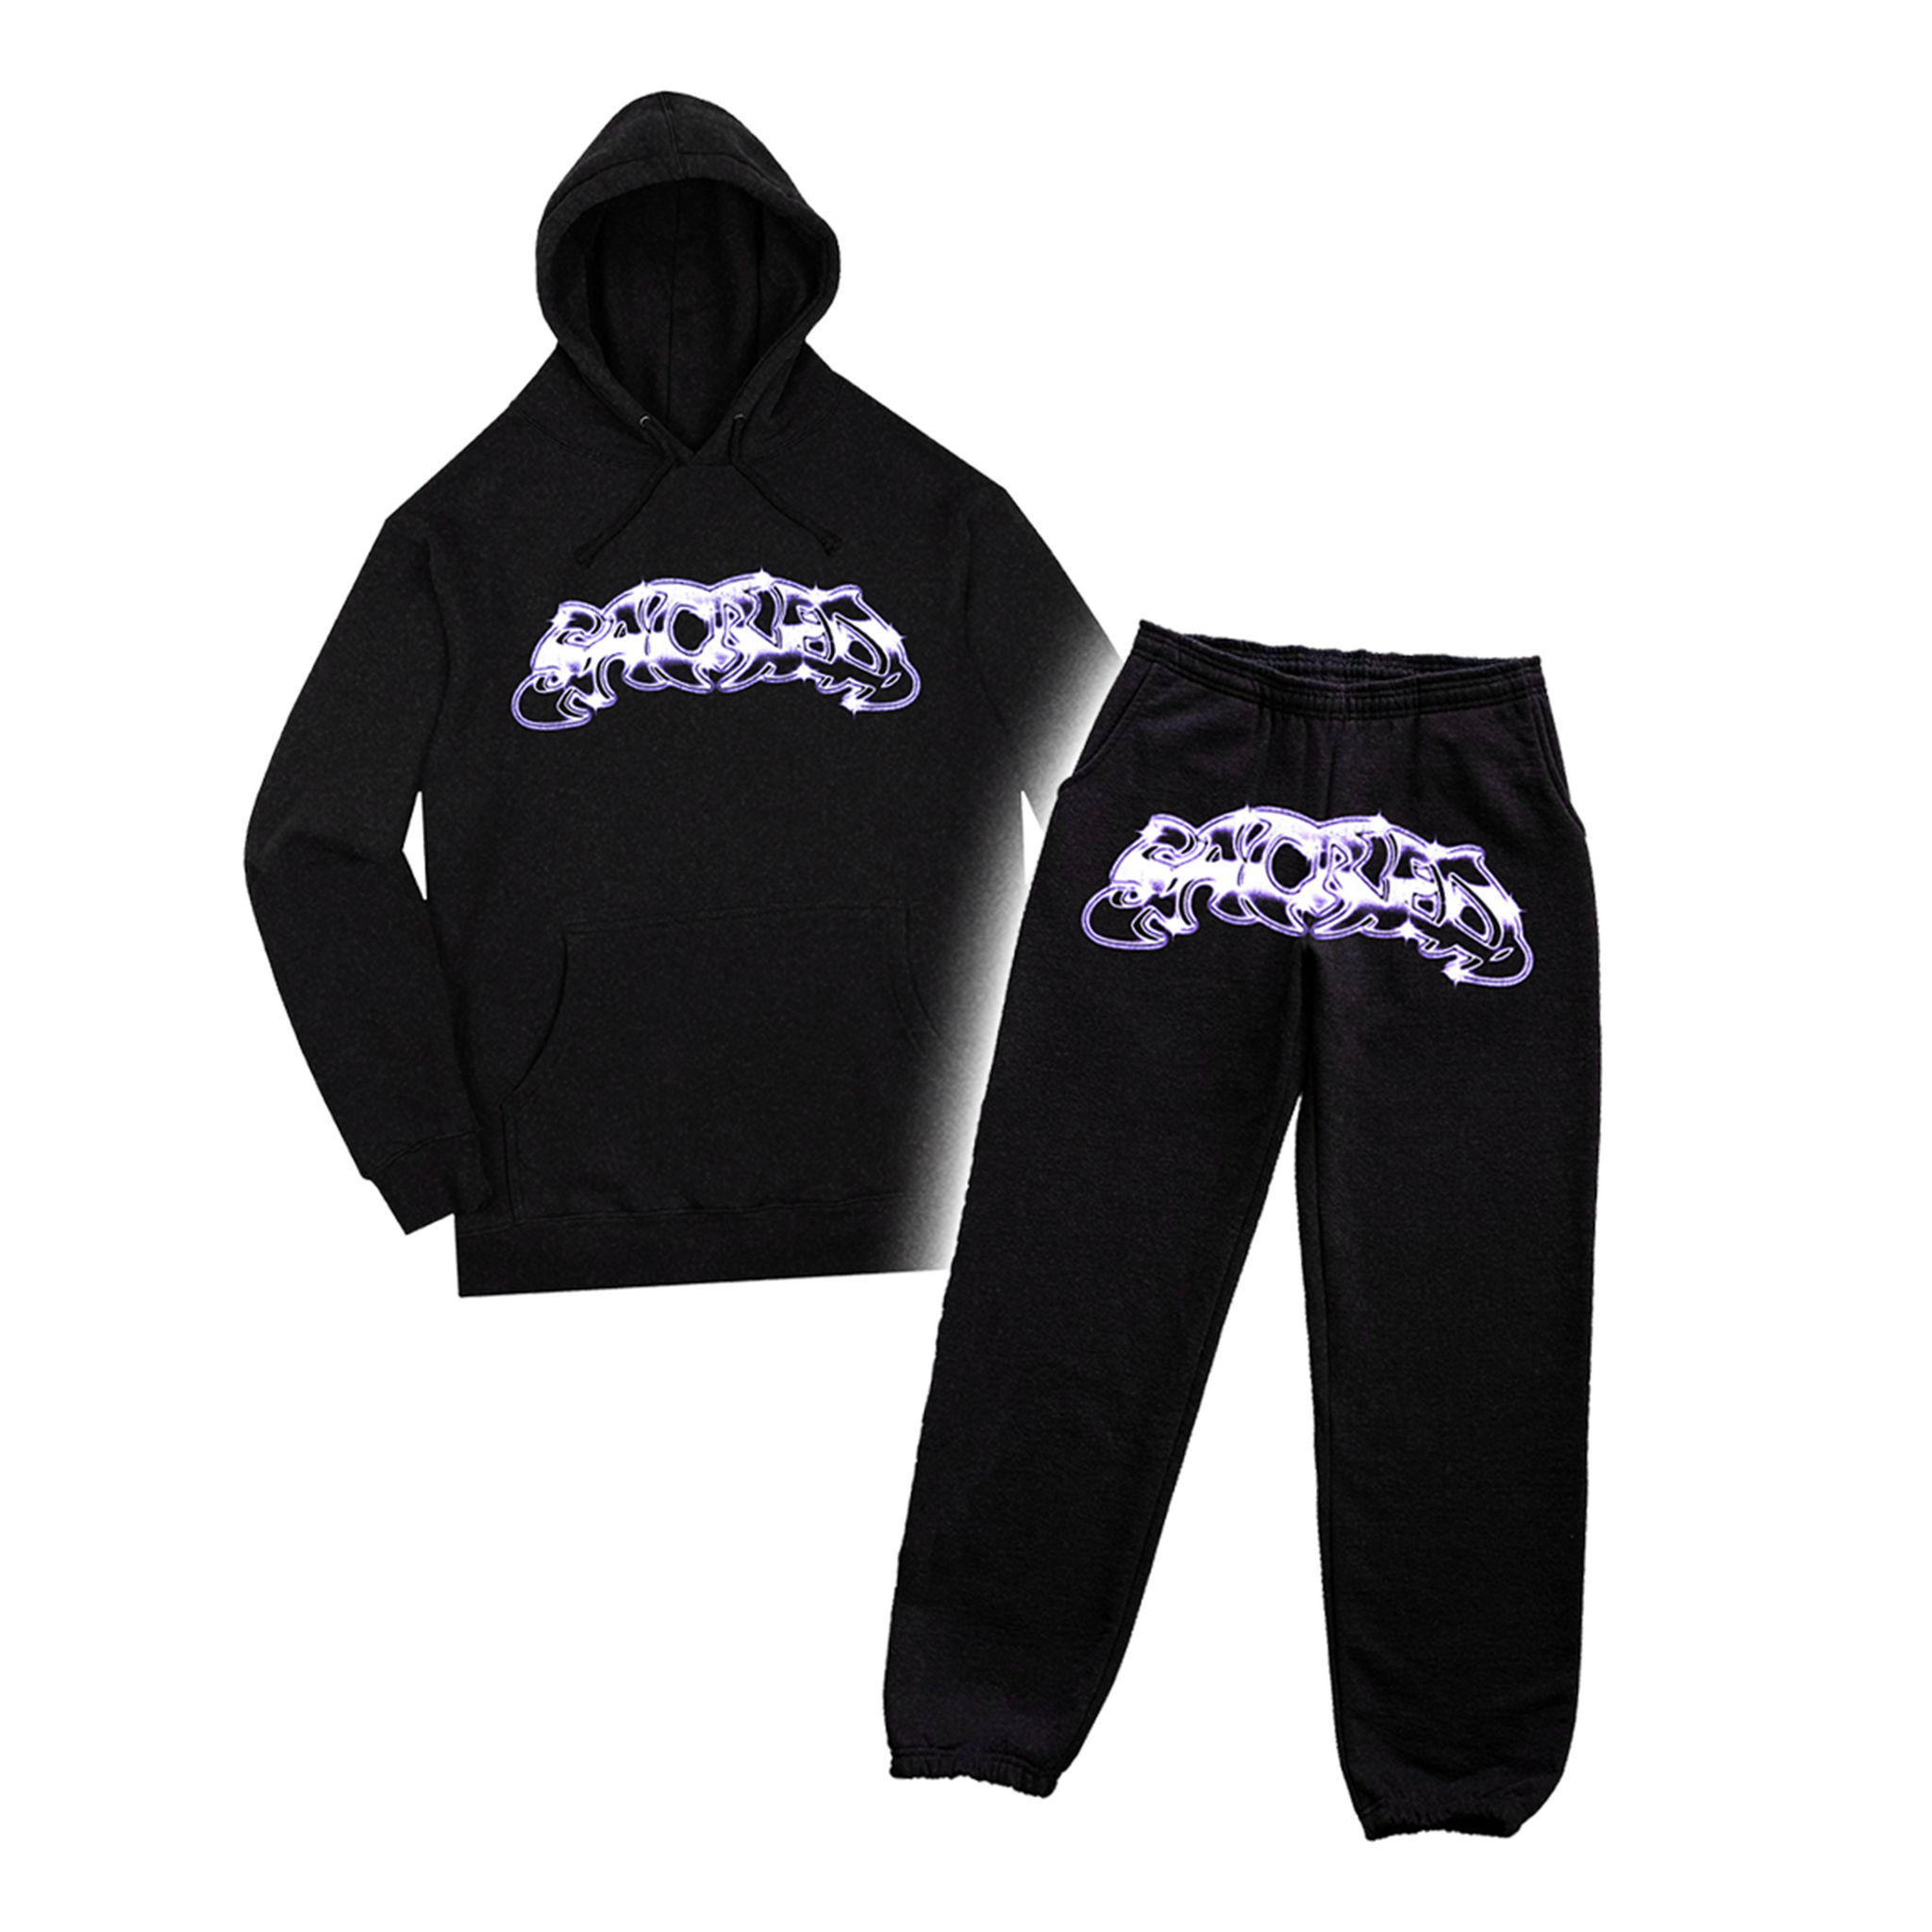 Lace By Tanaya Emblem Sweatsuit Hoodie & Sweatpants XL $250